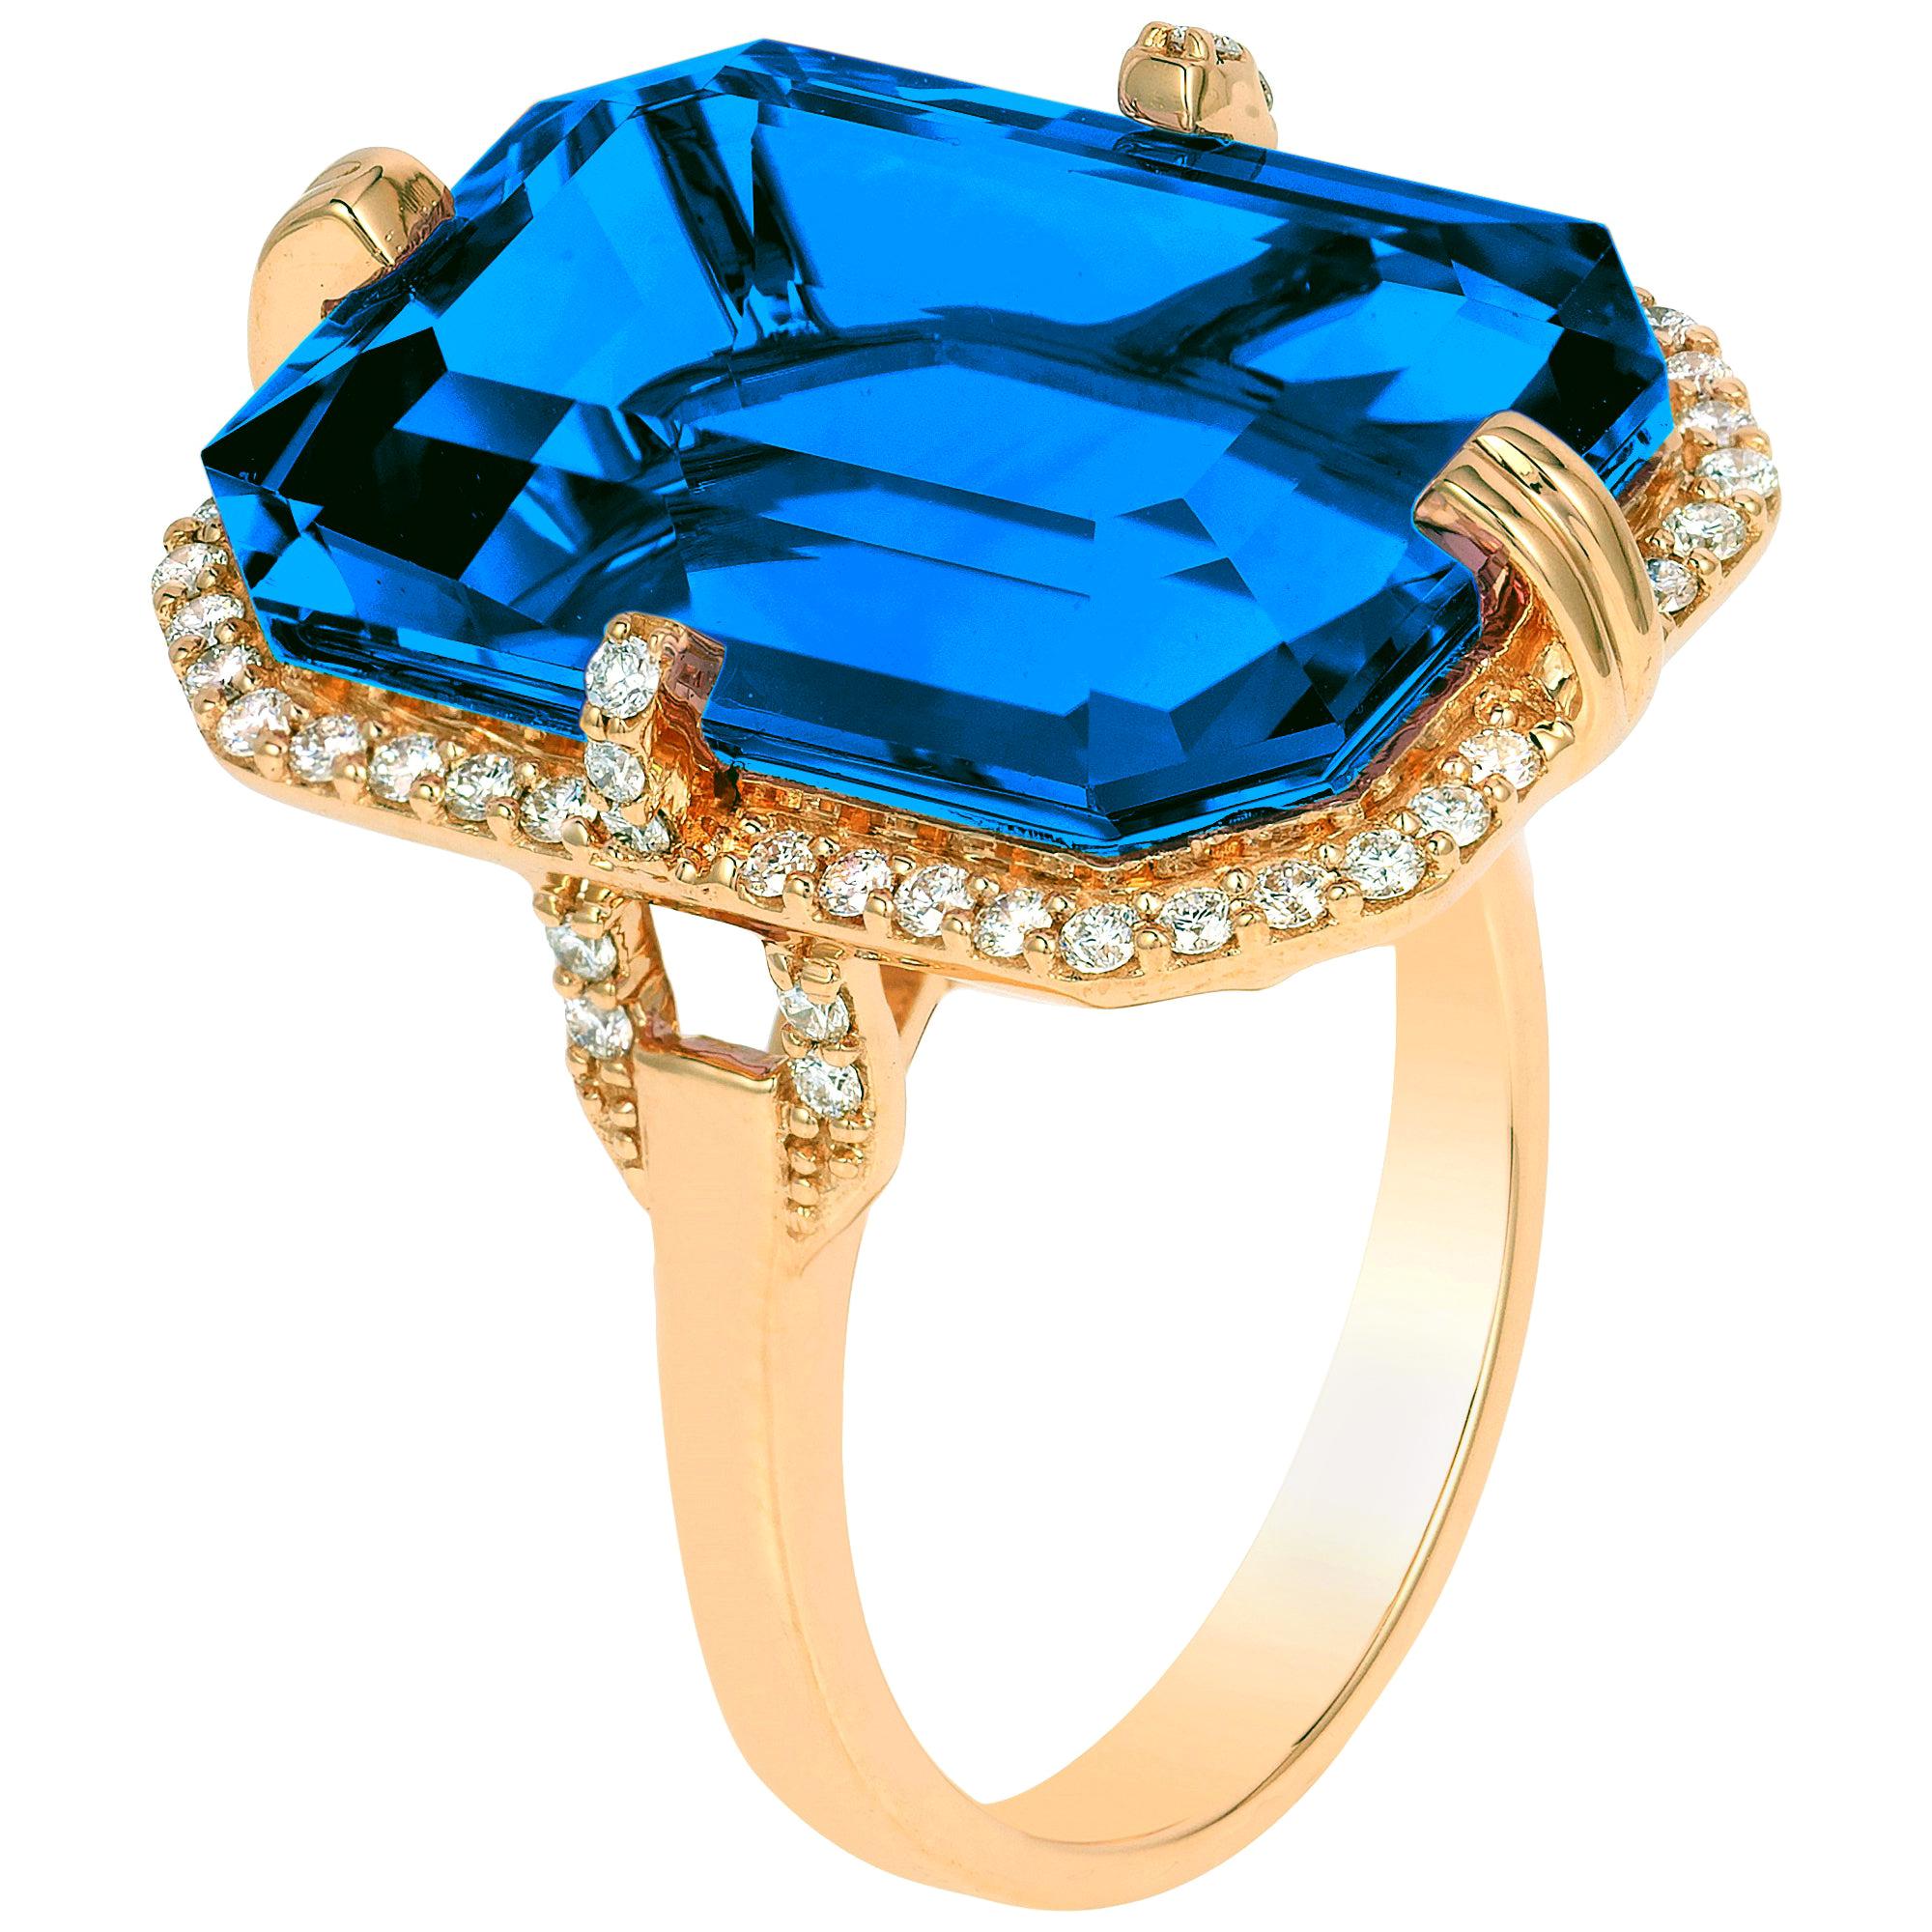 Emerald Cut Topaz Rings - For Sale on 1stDibs | emerald cut blue 